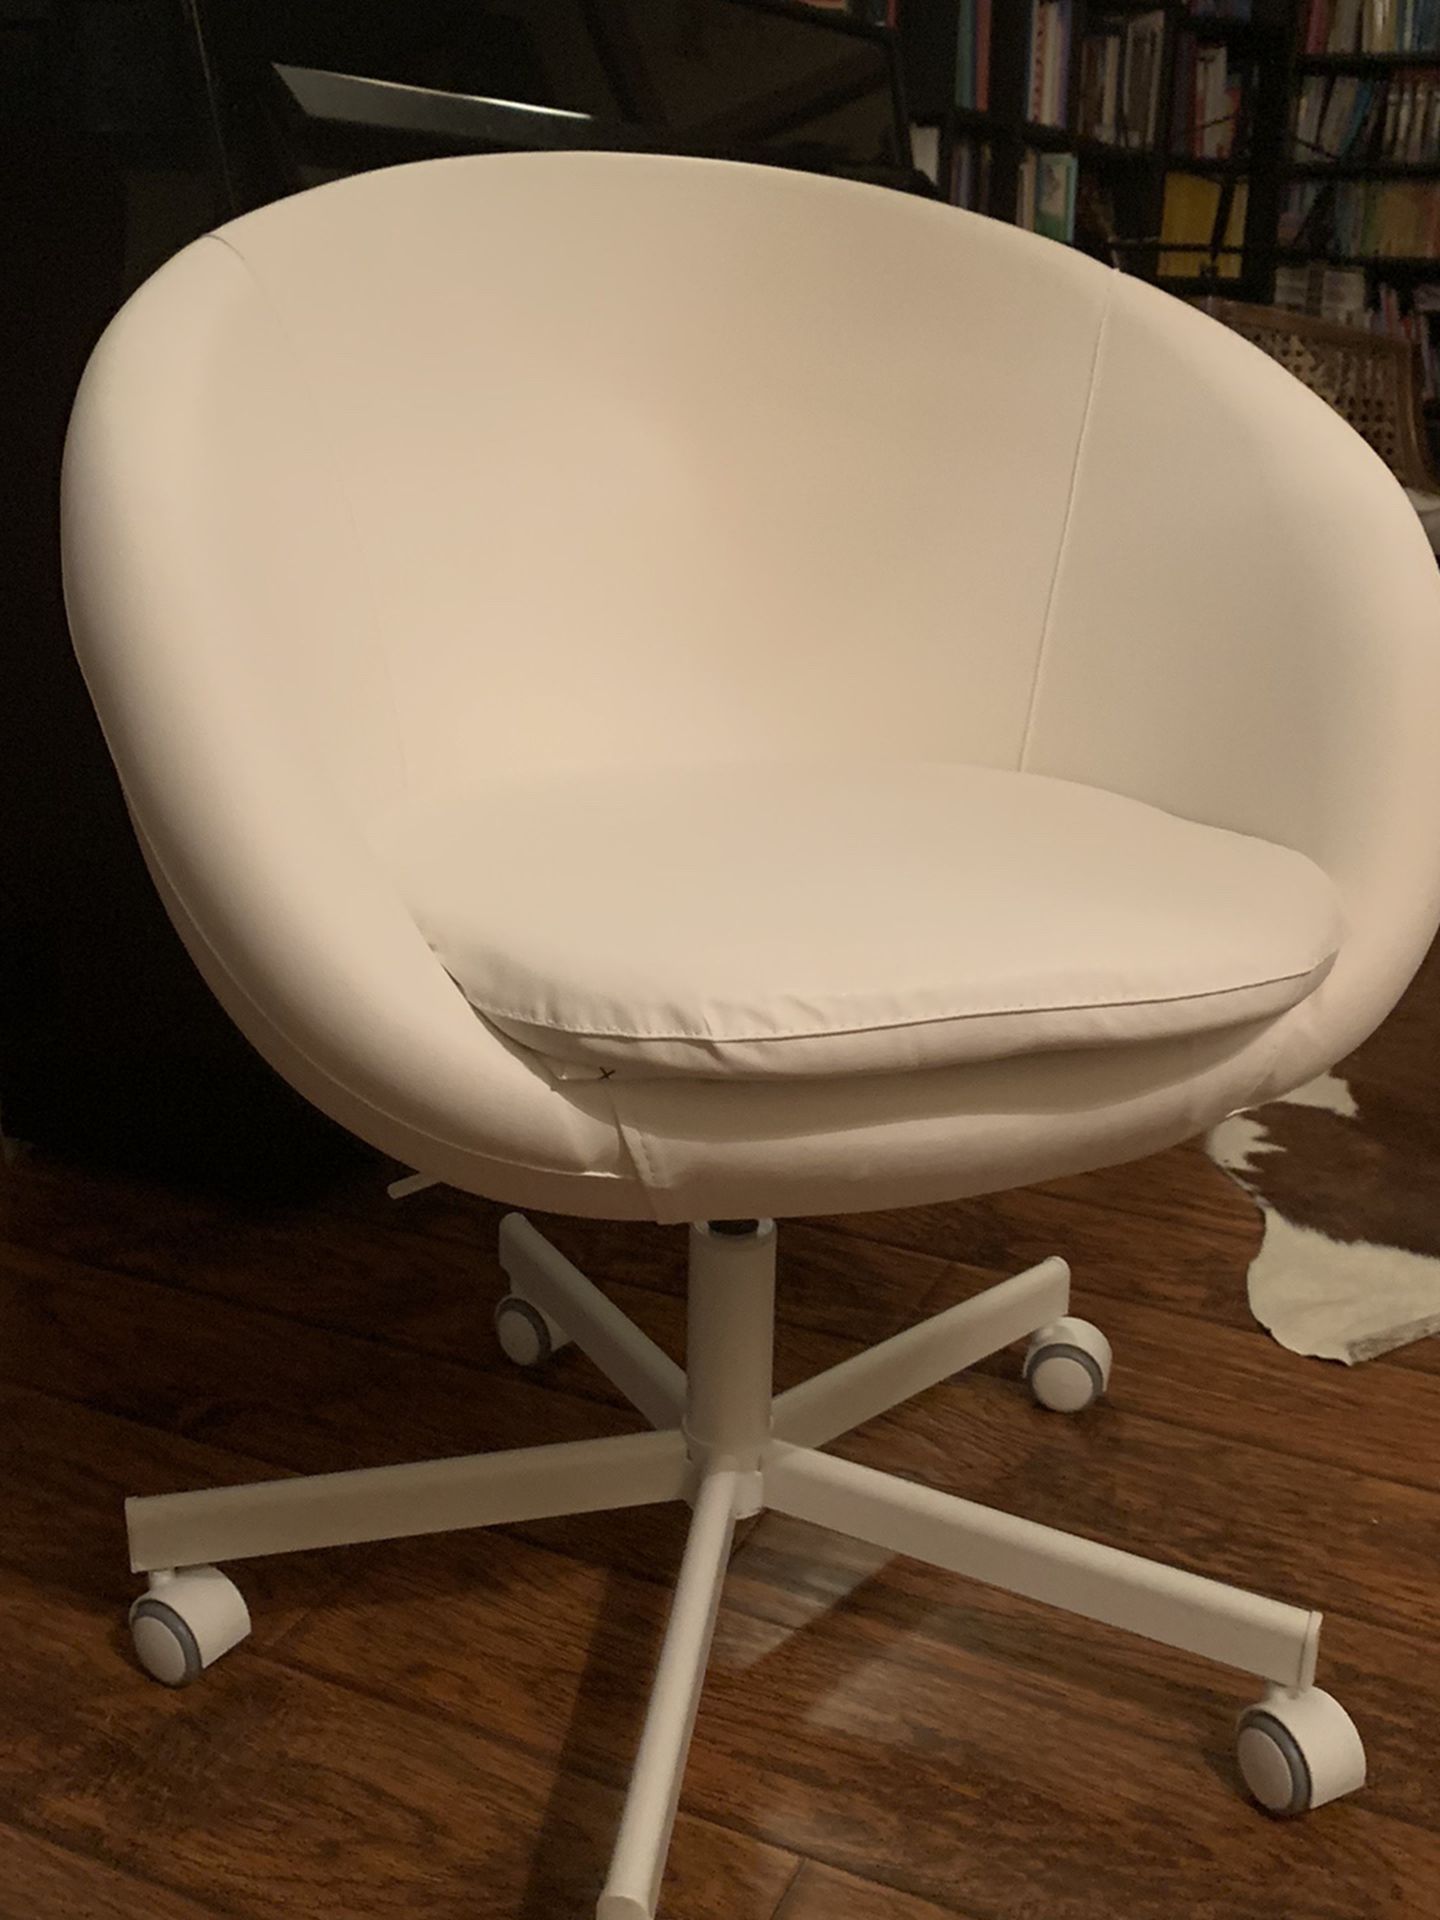 IKEA Desk White Chair -BRAND NEW!